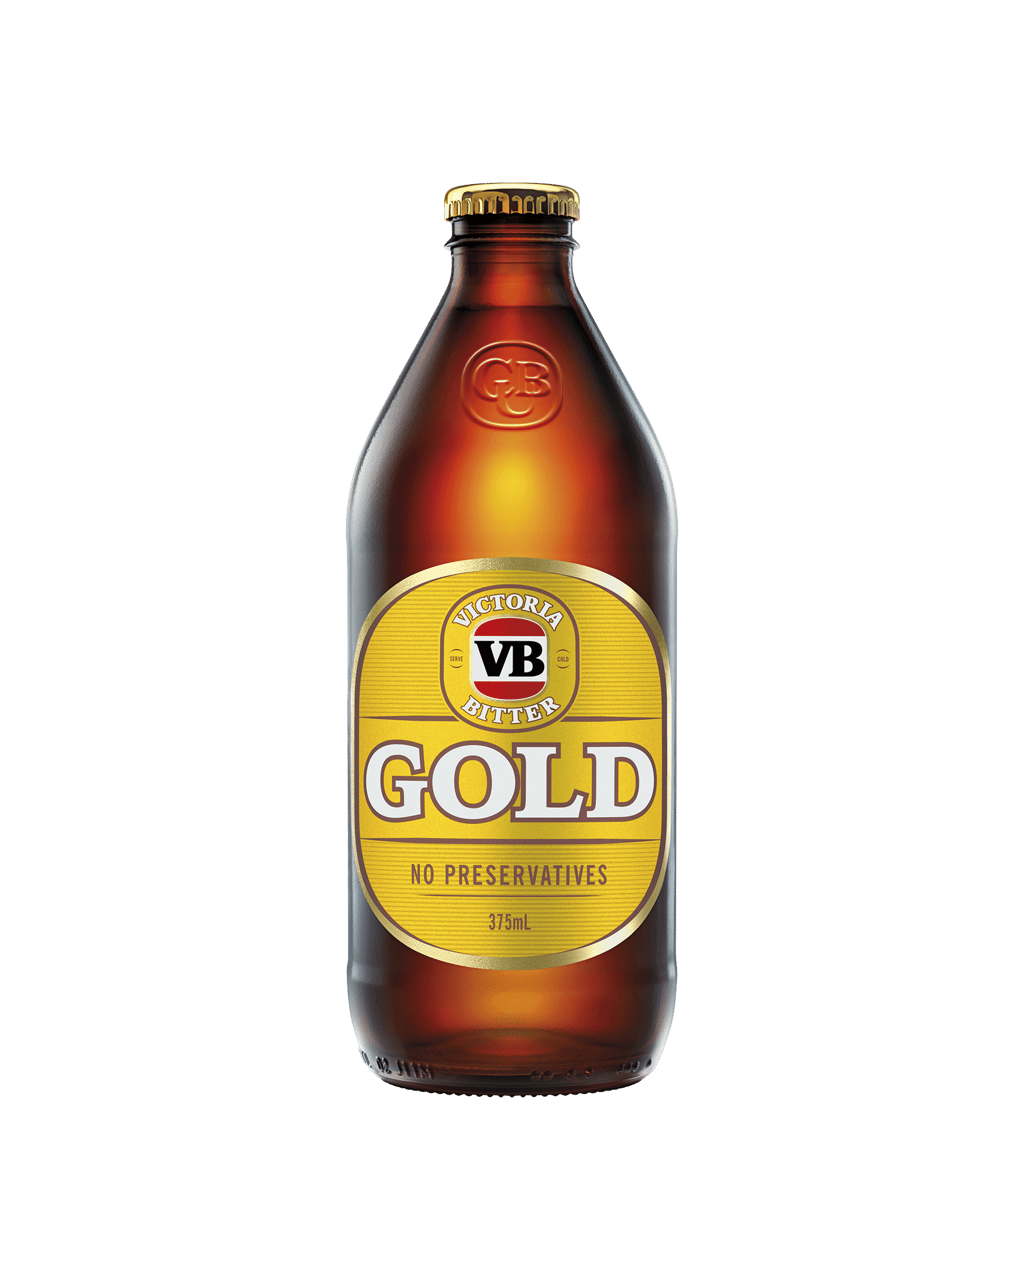 Buy Victoria Bitter Gold Bottles 375ml Online Lowest Price Guarantee Best Deals Same Day